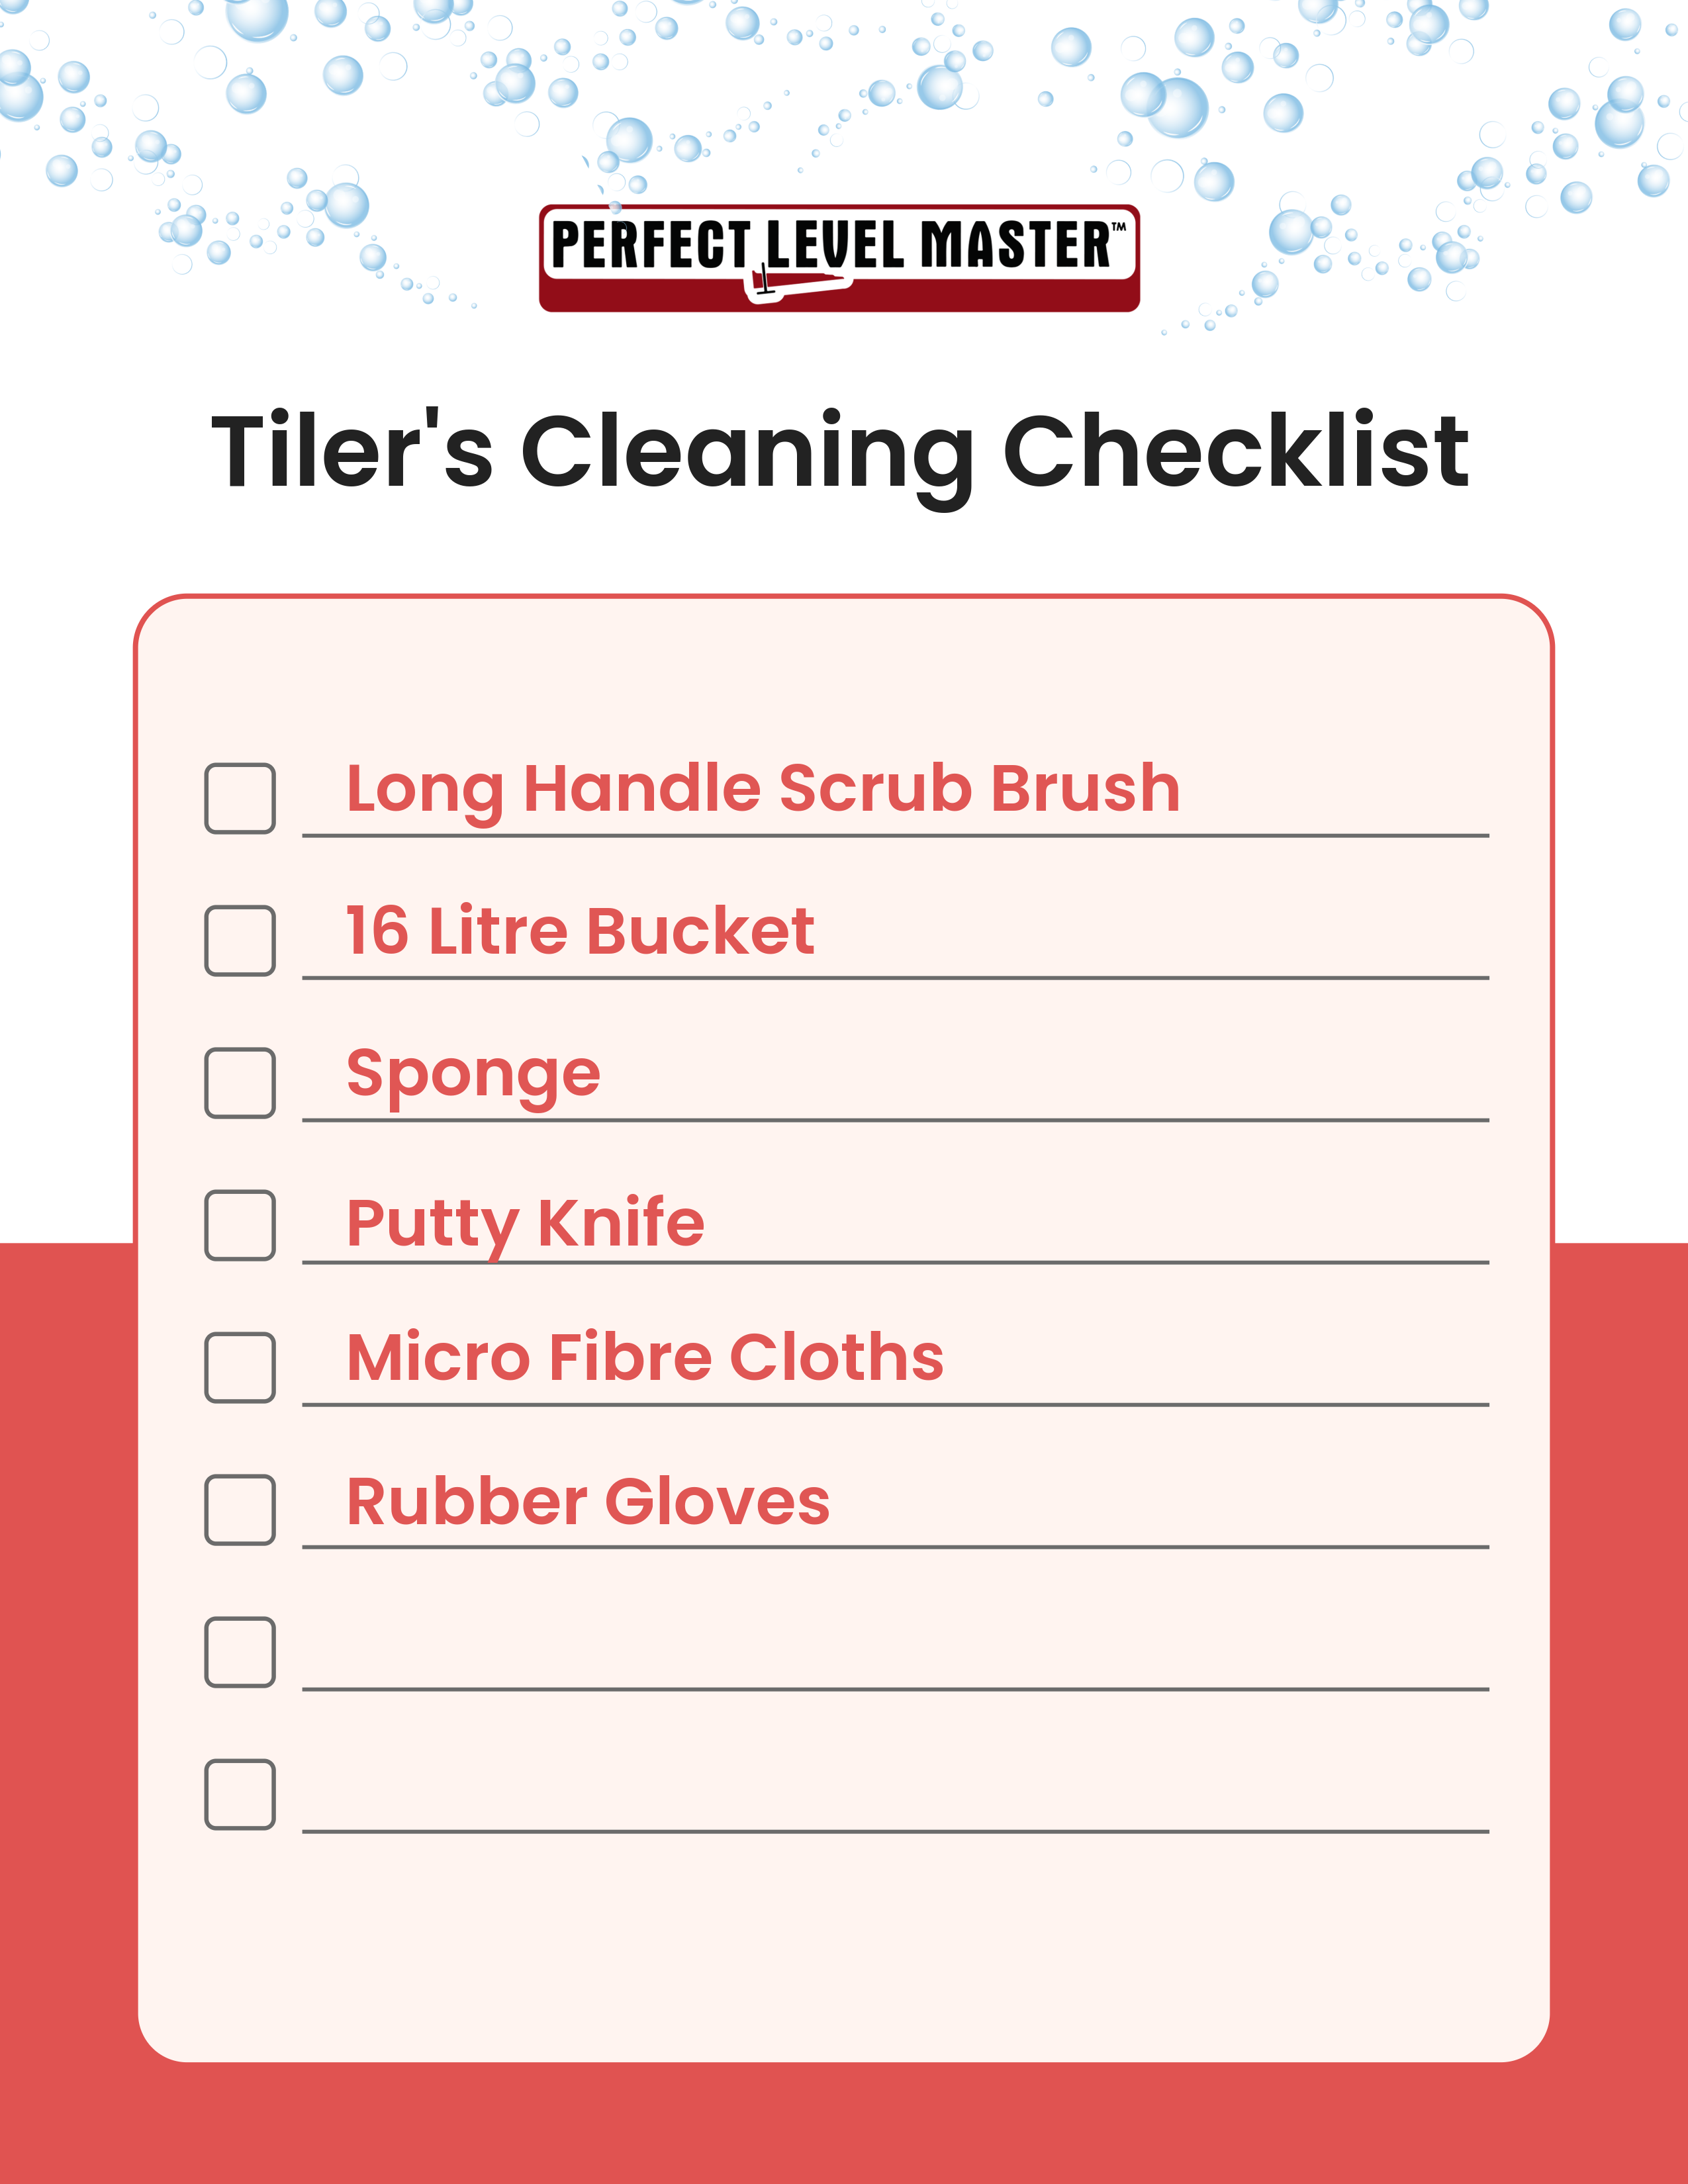 Tiler's Cleaning Checklist